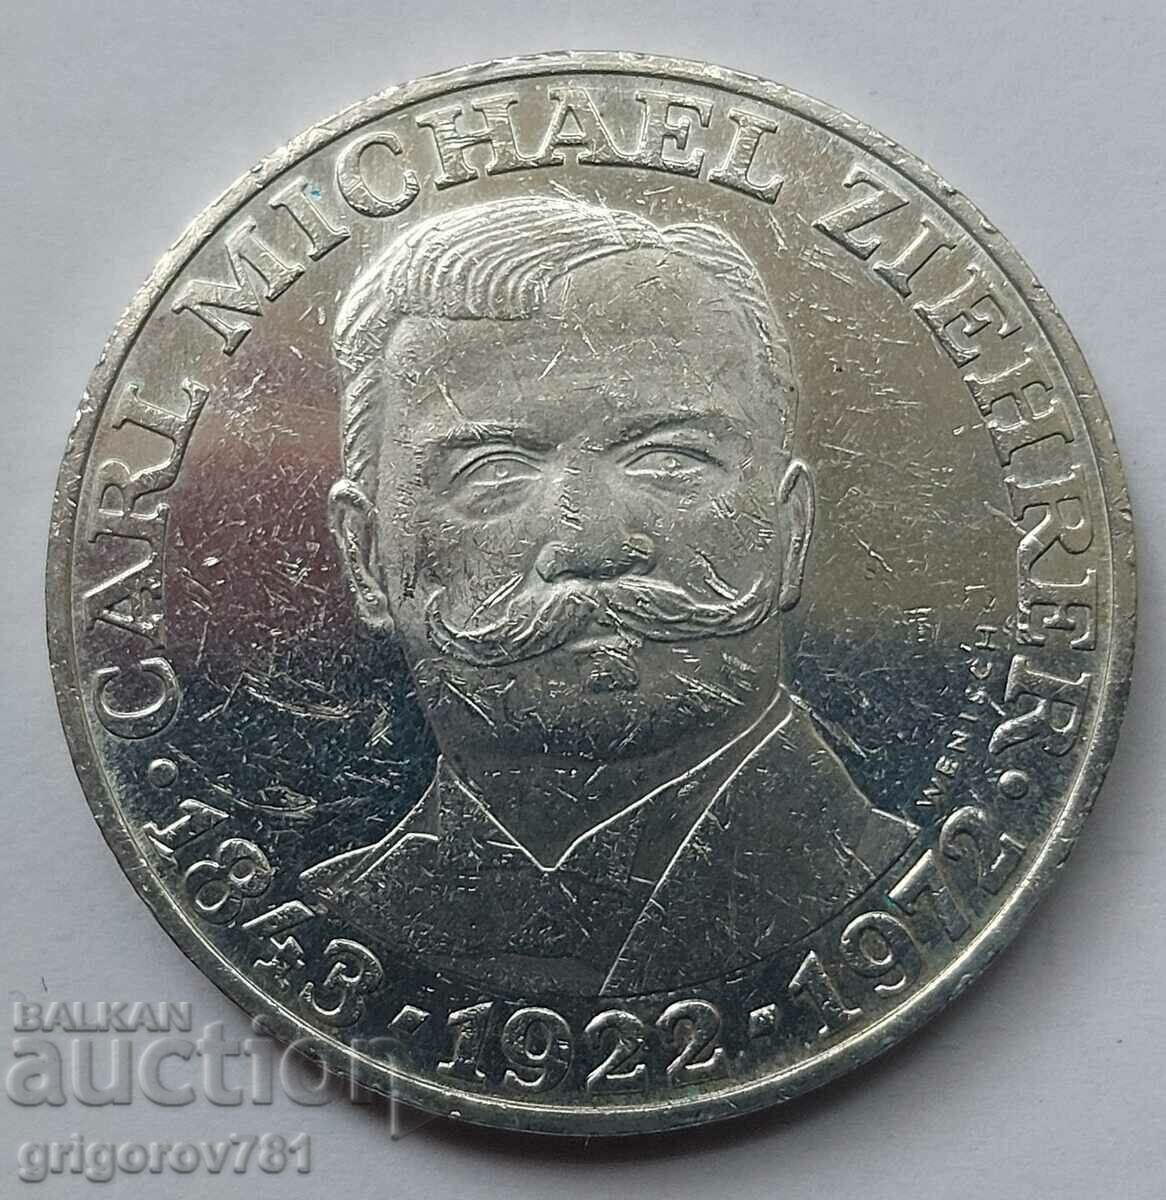 25 Shilling Silver Austria 1972 - Silver Coin #31